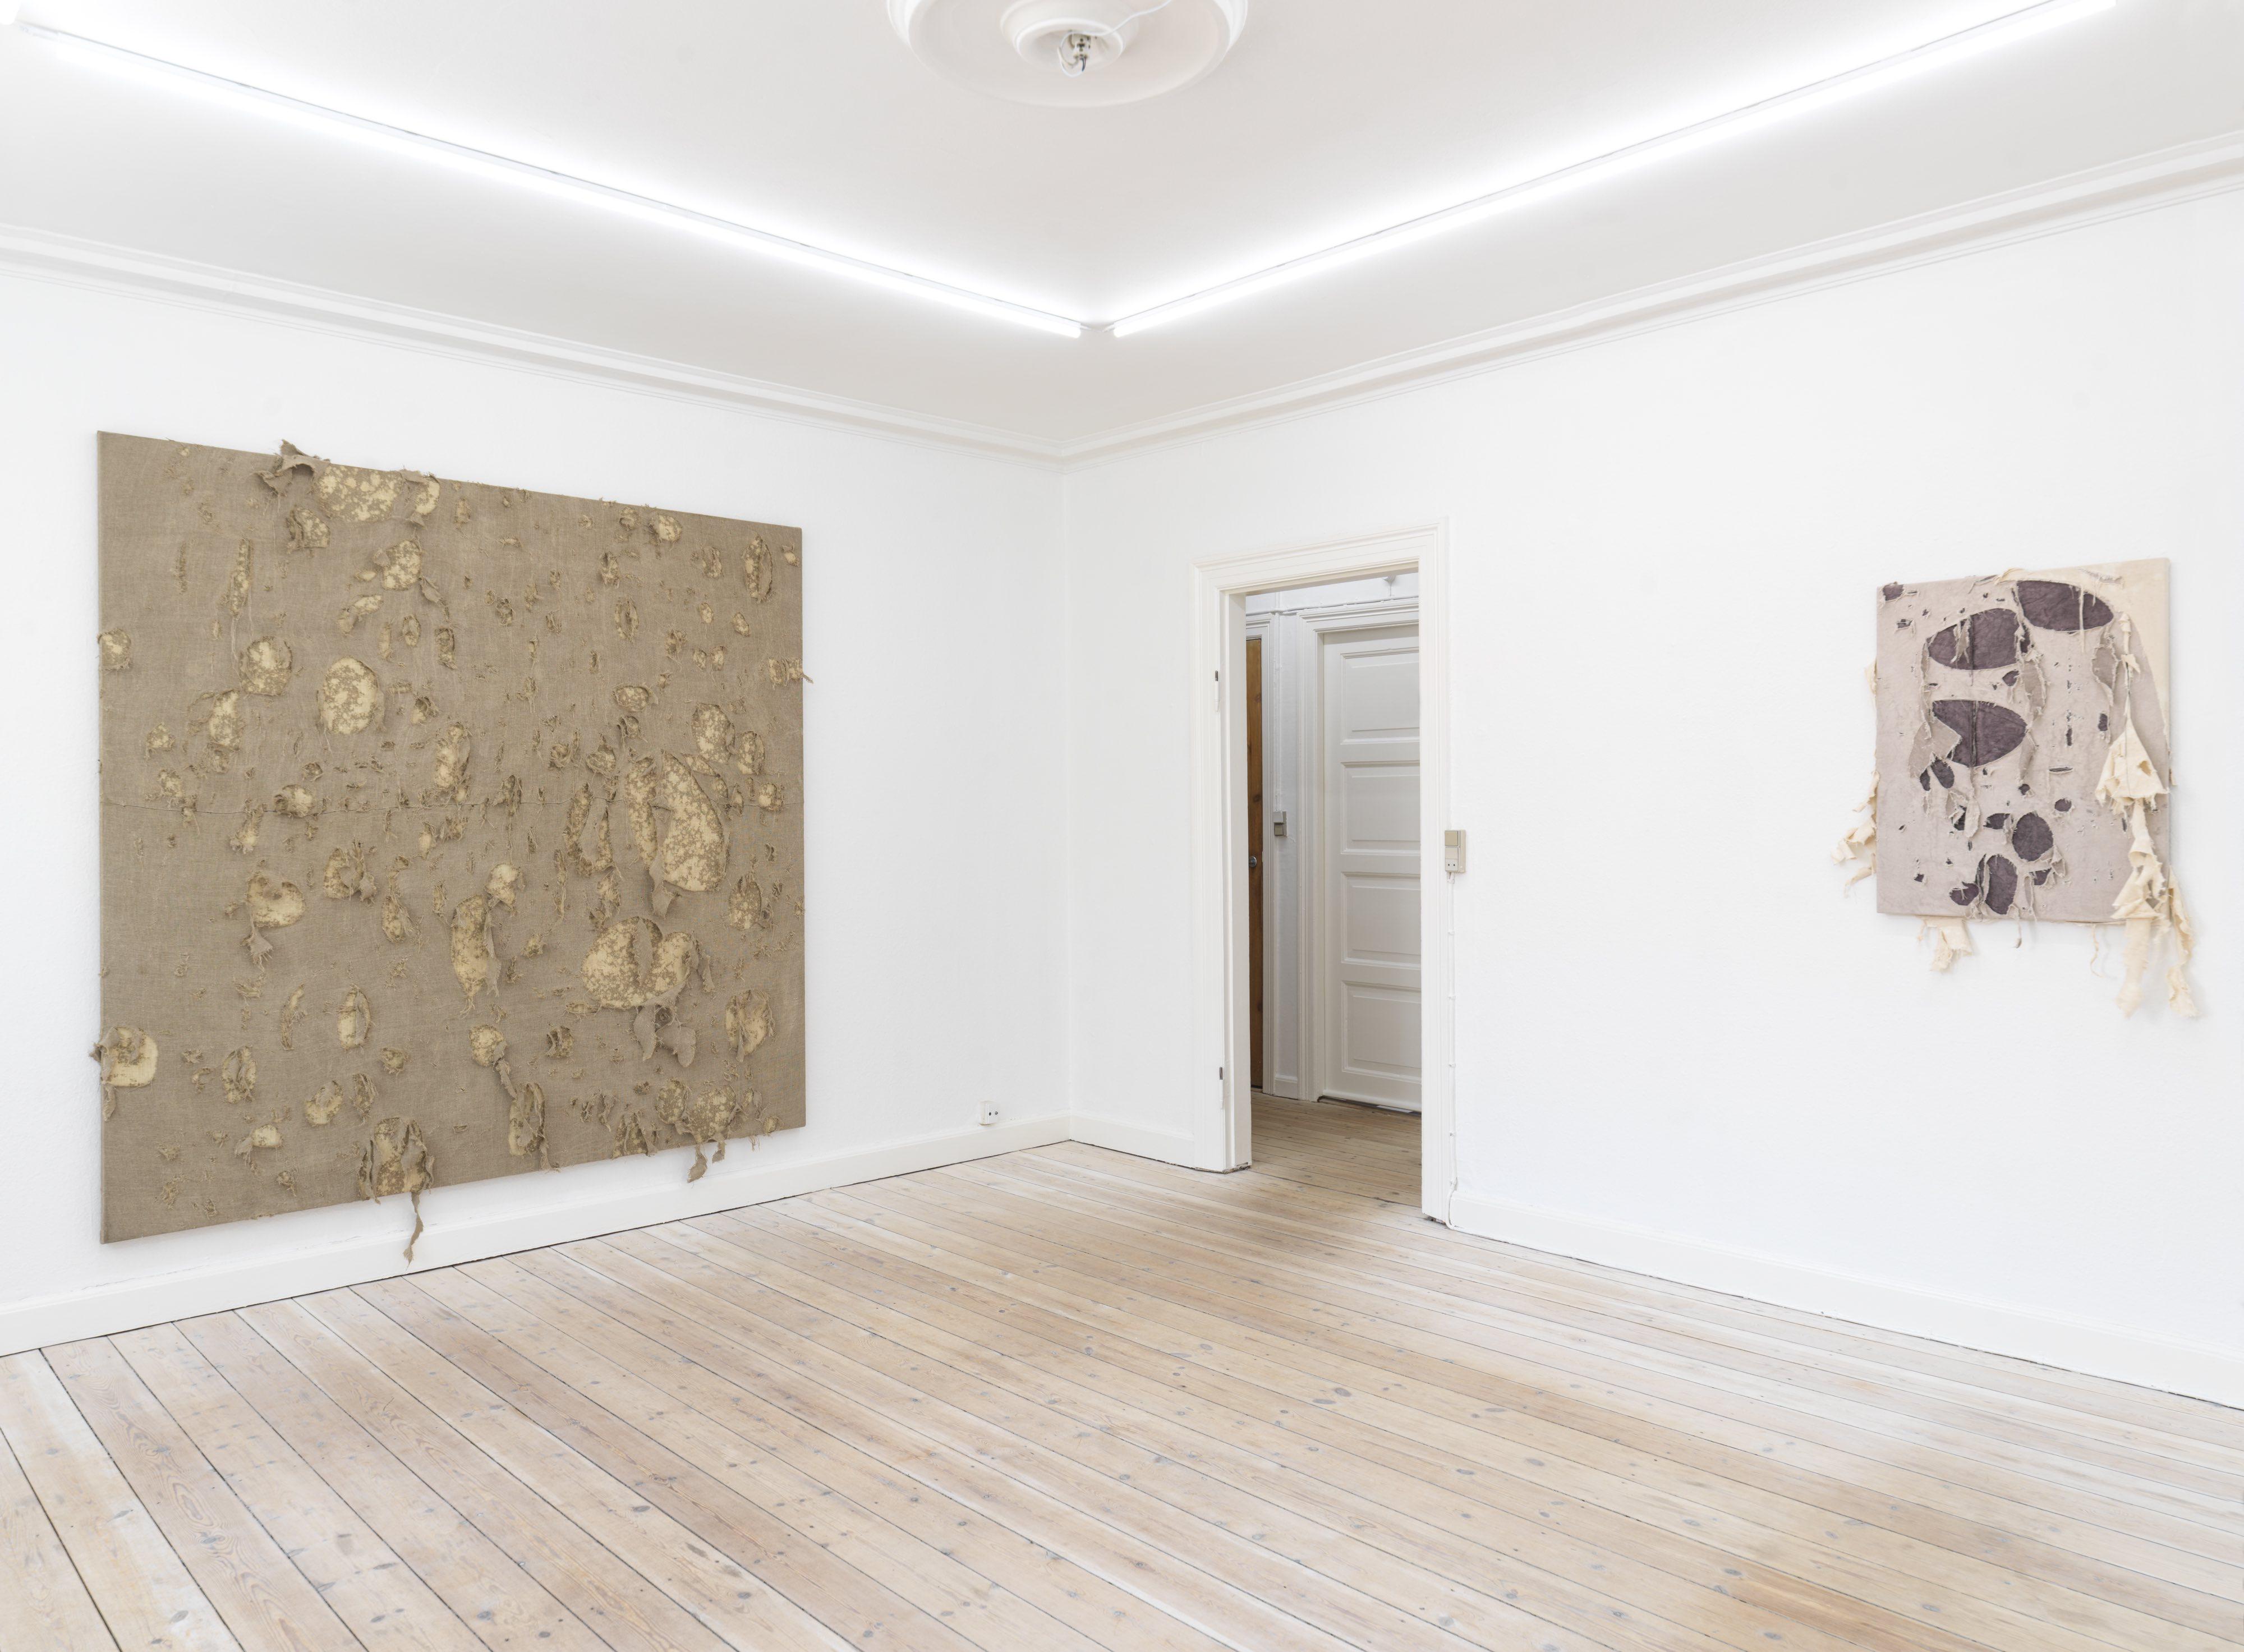 Javier Alvarez Sagredo, Installation view at Matteo Cantarella, 19.08.22 - 30.09.22